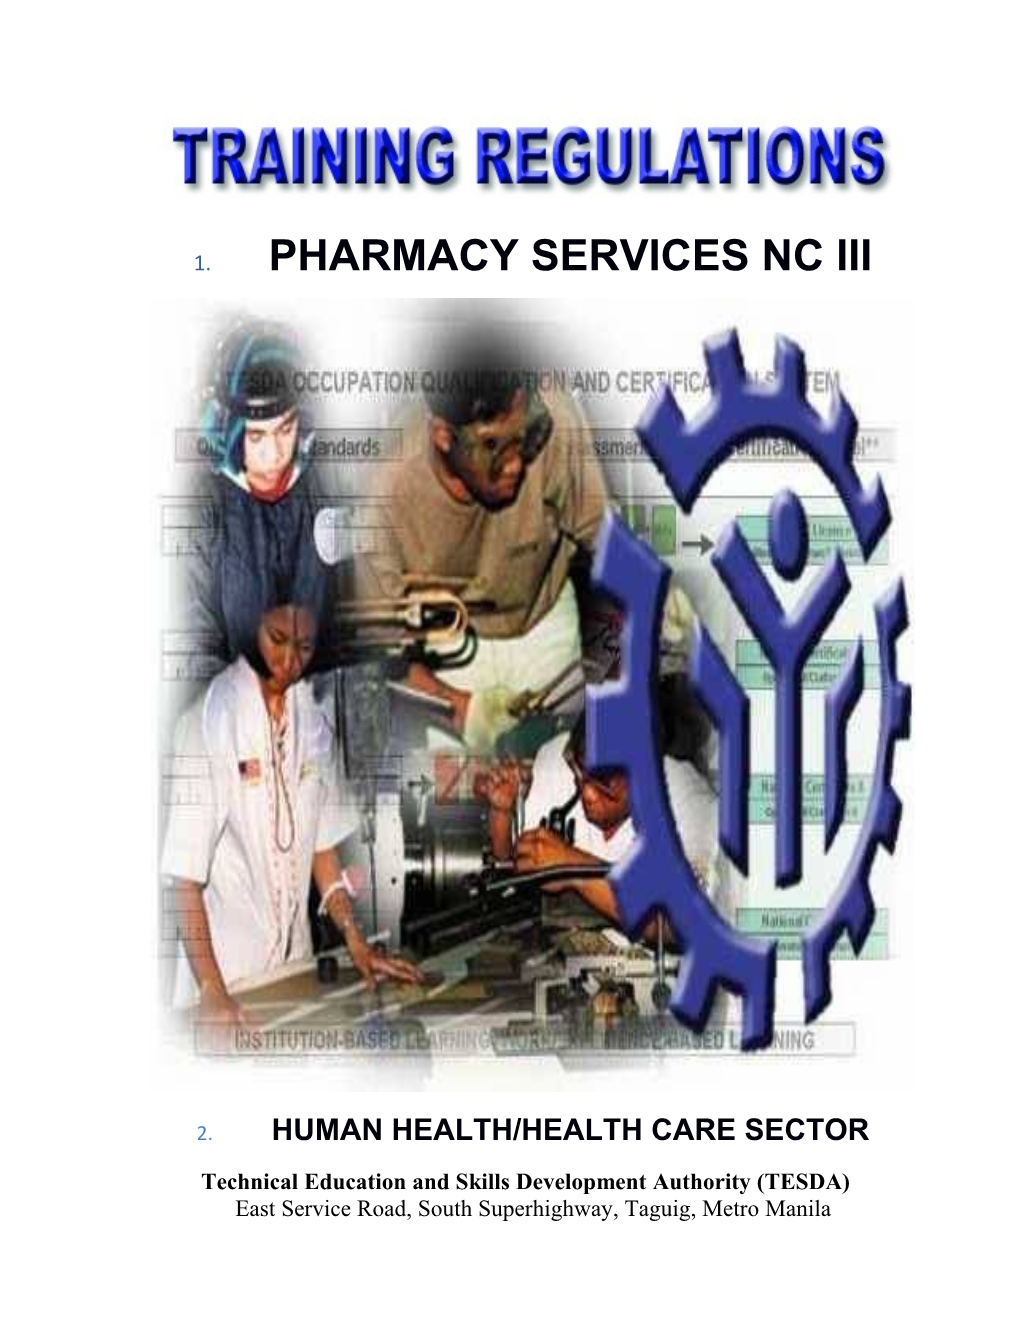 Human Health/Health Care Sector